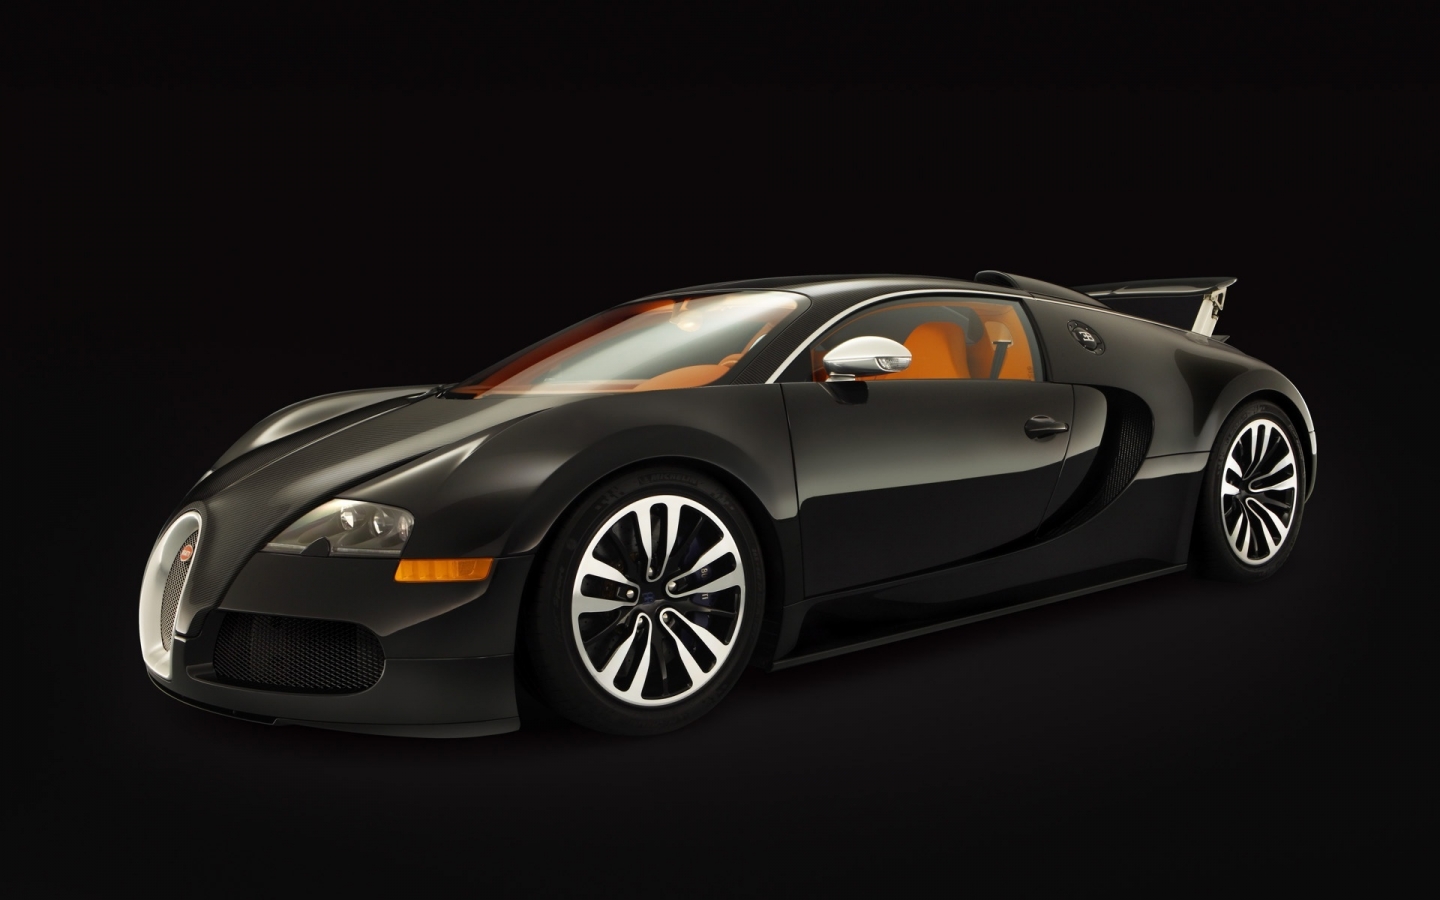 Bugatti Veyron Sang Noir 2008 - Side Angle for 1440 x 900 widescreen resolution